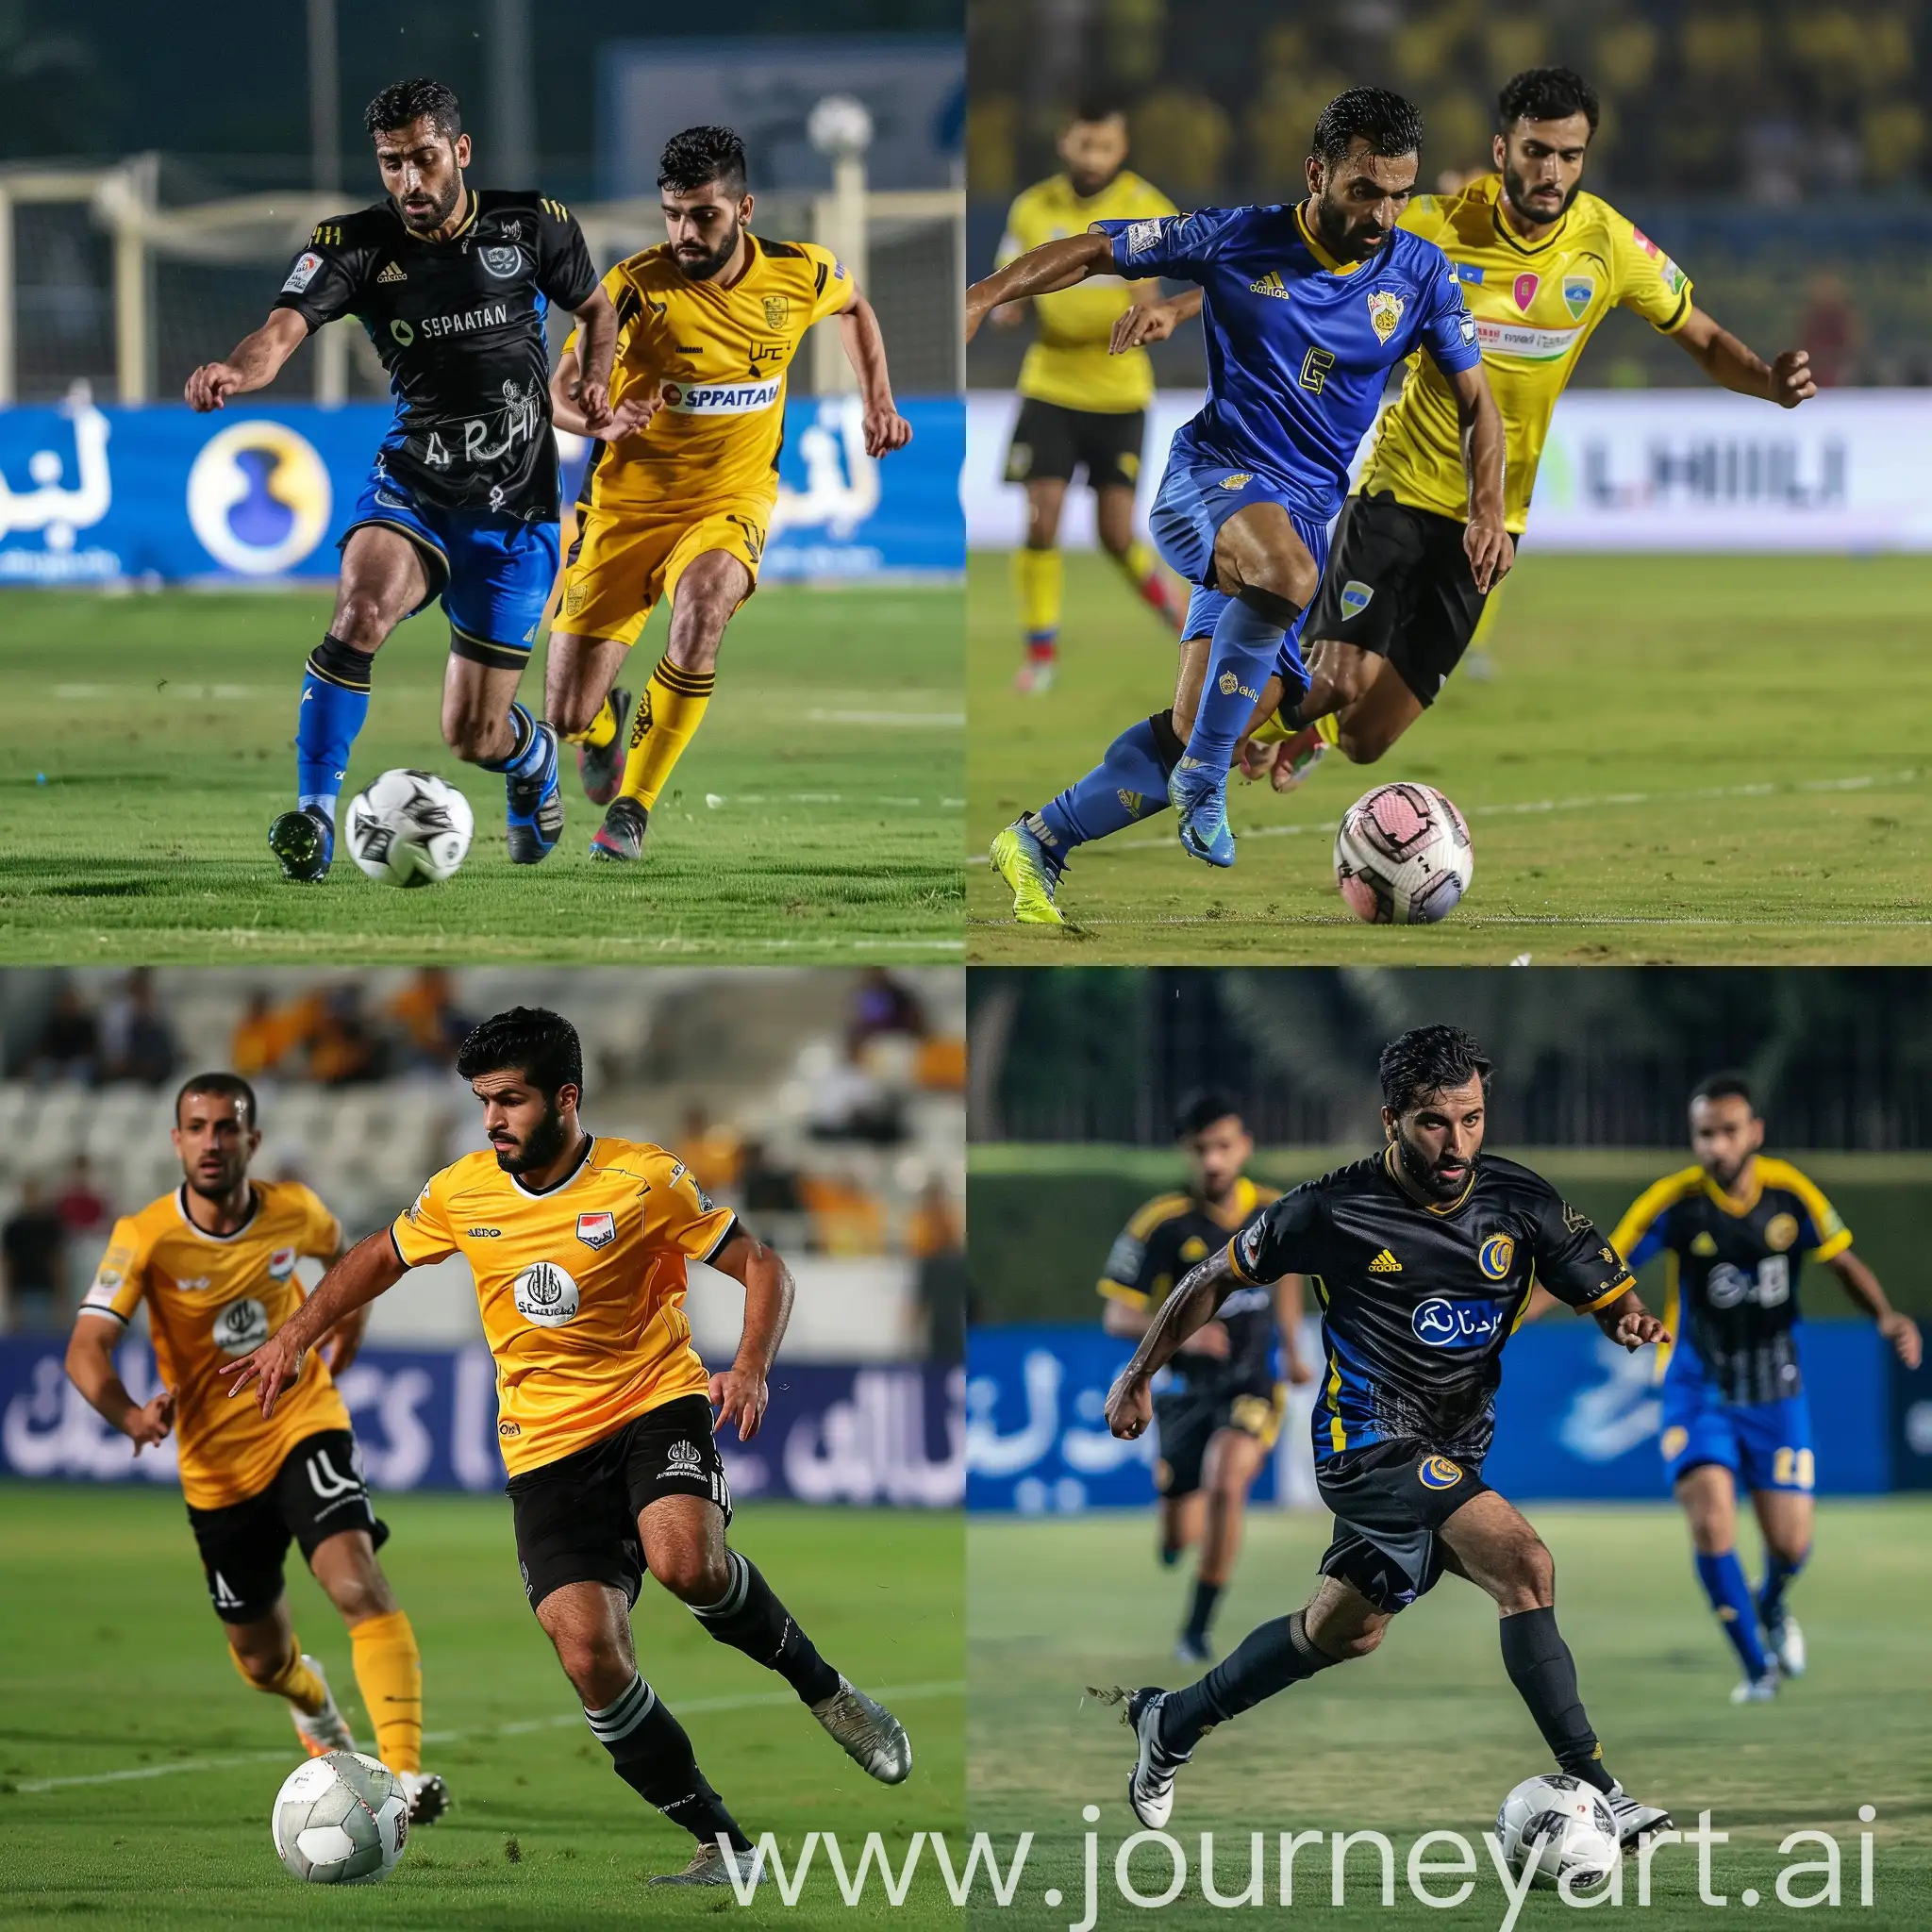 Sepahan-versus-AlHilal-Football-Match-Intense-Competition-in-Stadium